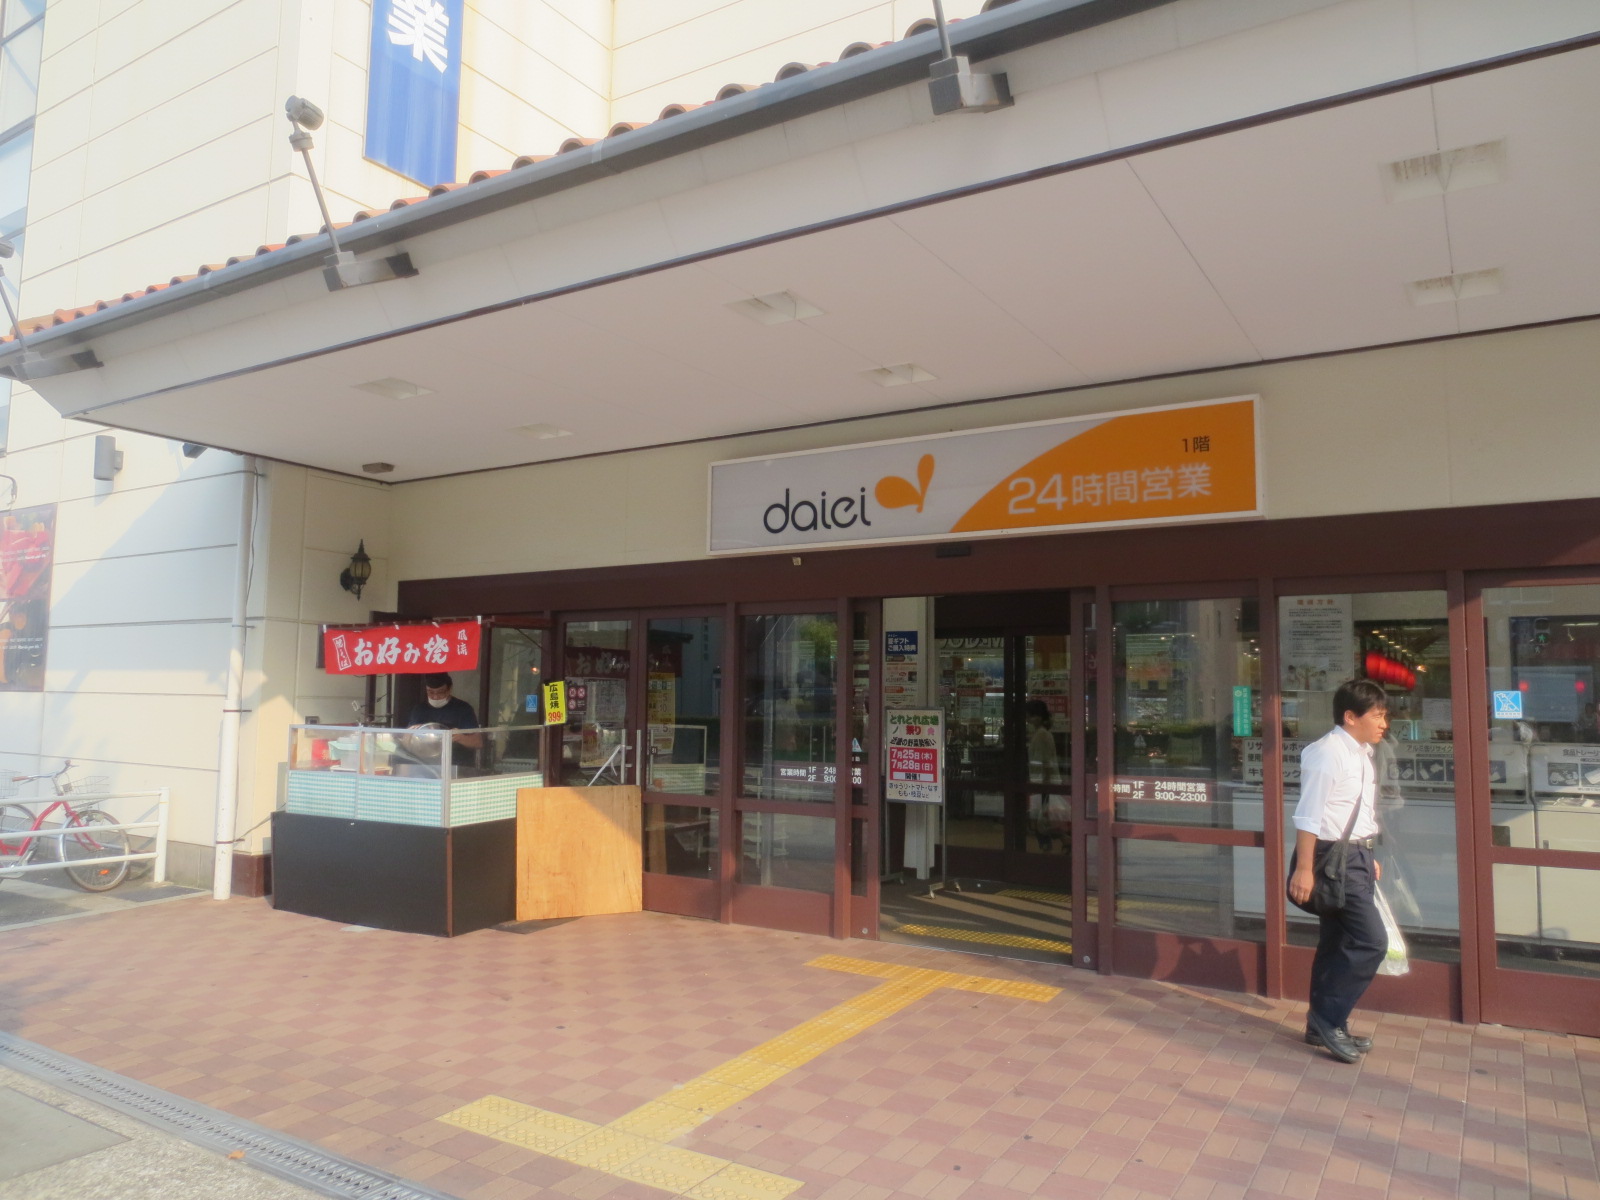 Supermarket. 529m to Daiei Konan store (Super)